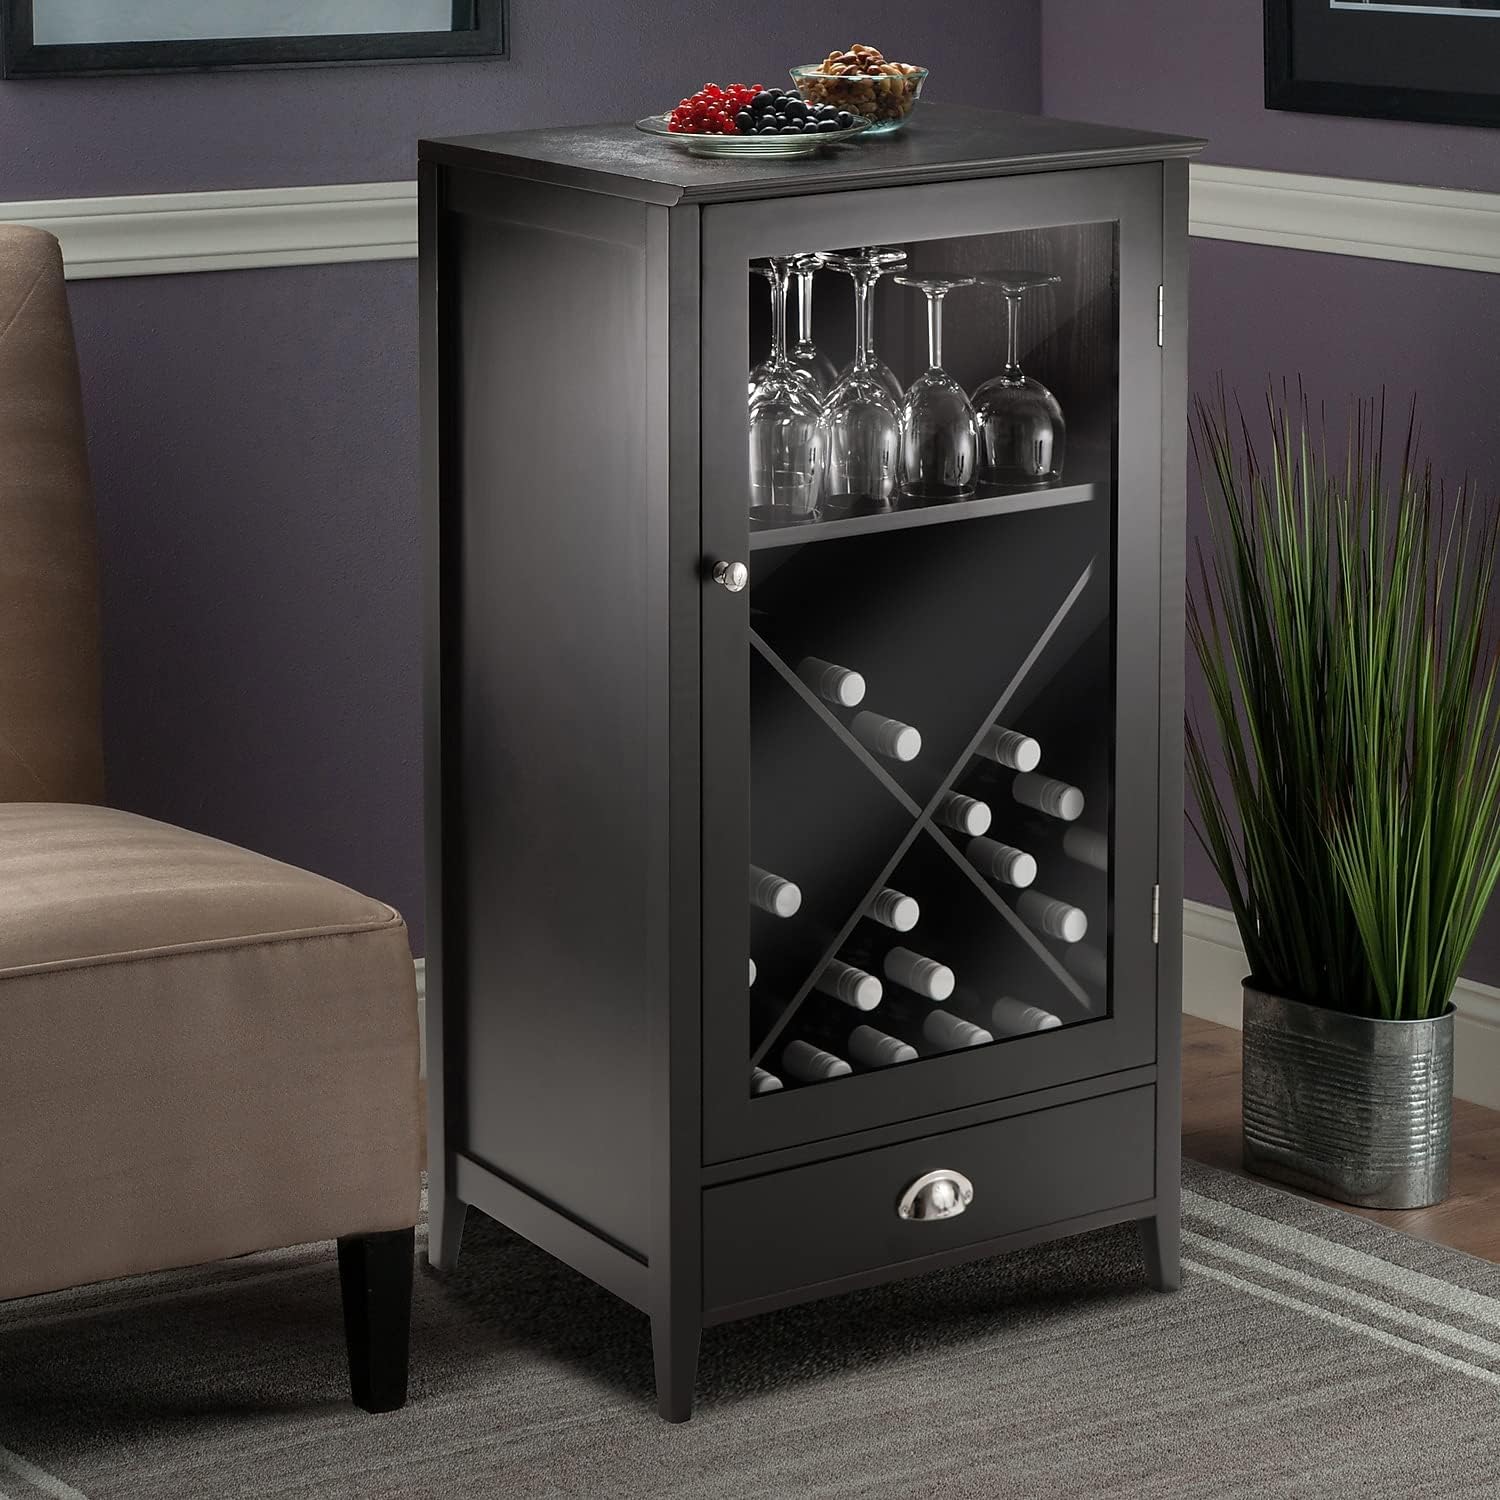 Winsome Bordeaux Modular Wine Cabinet X-Panel, Dark Wood Finish (92442)